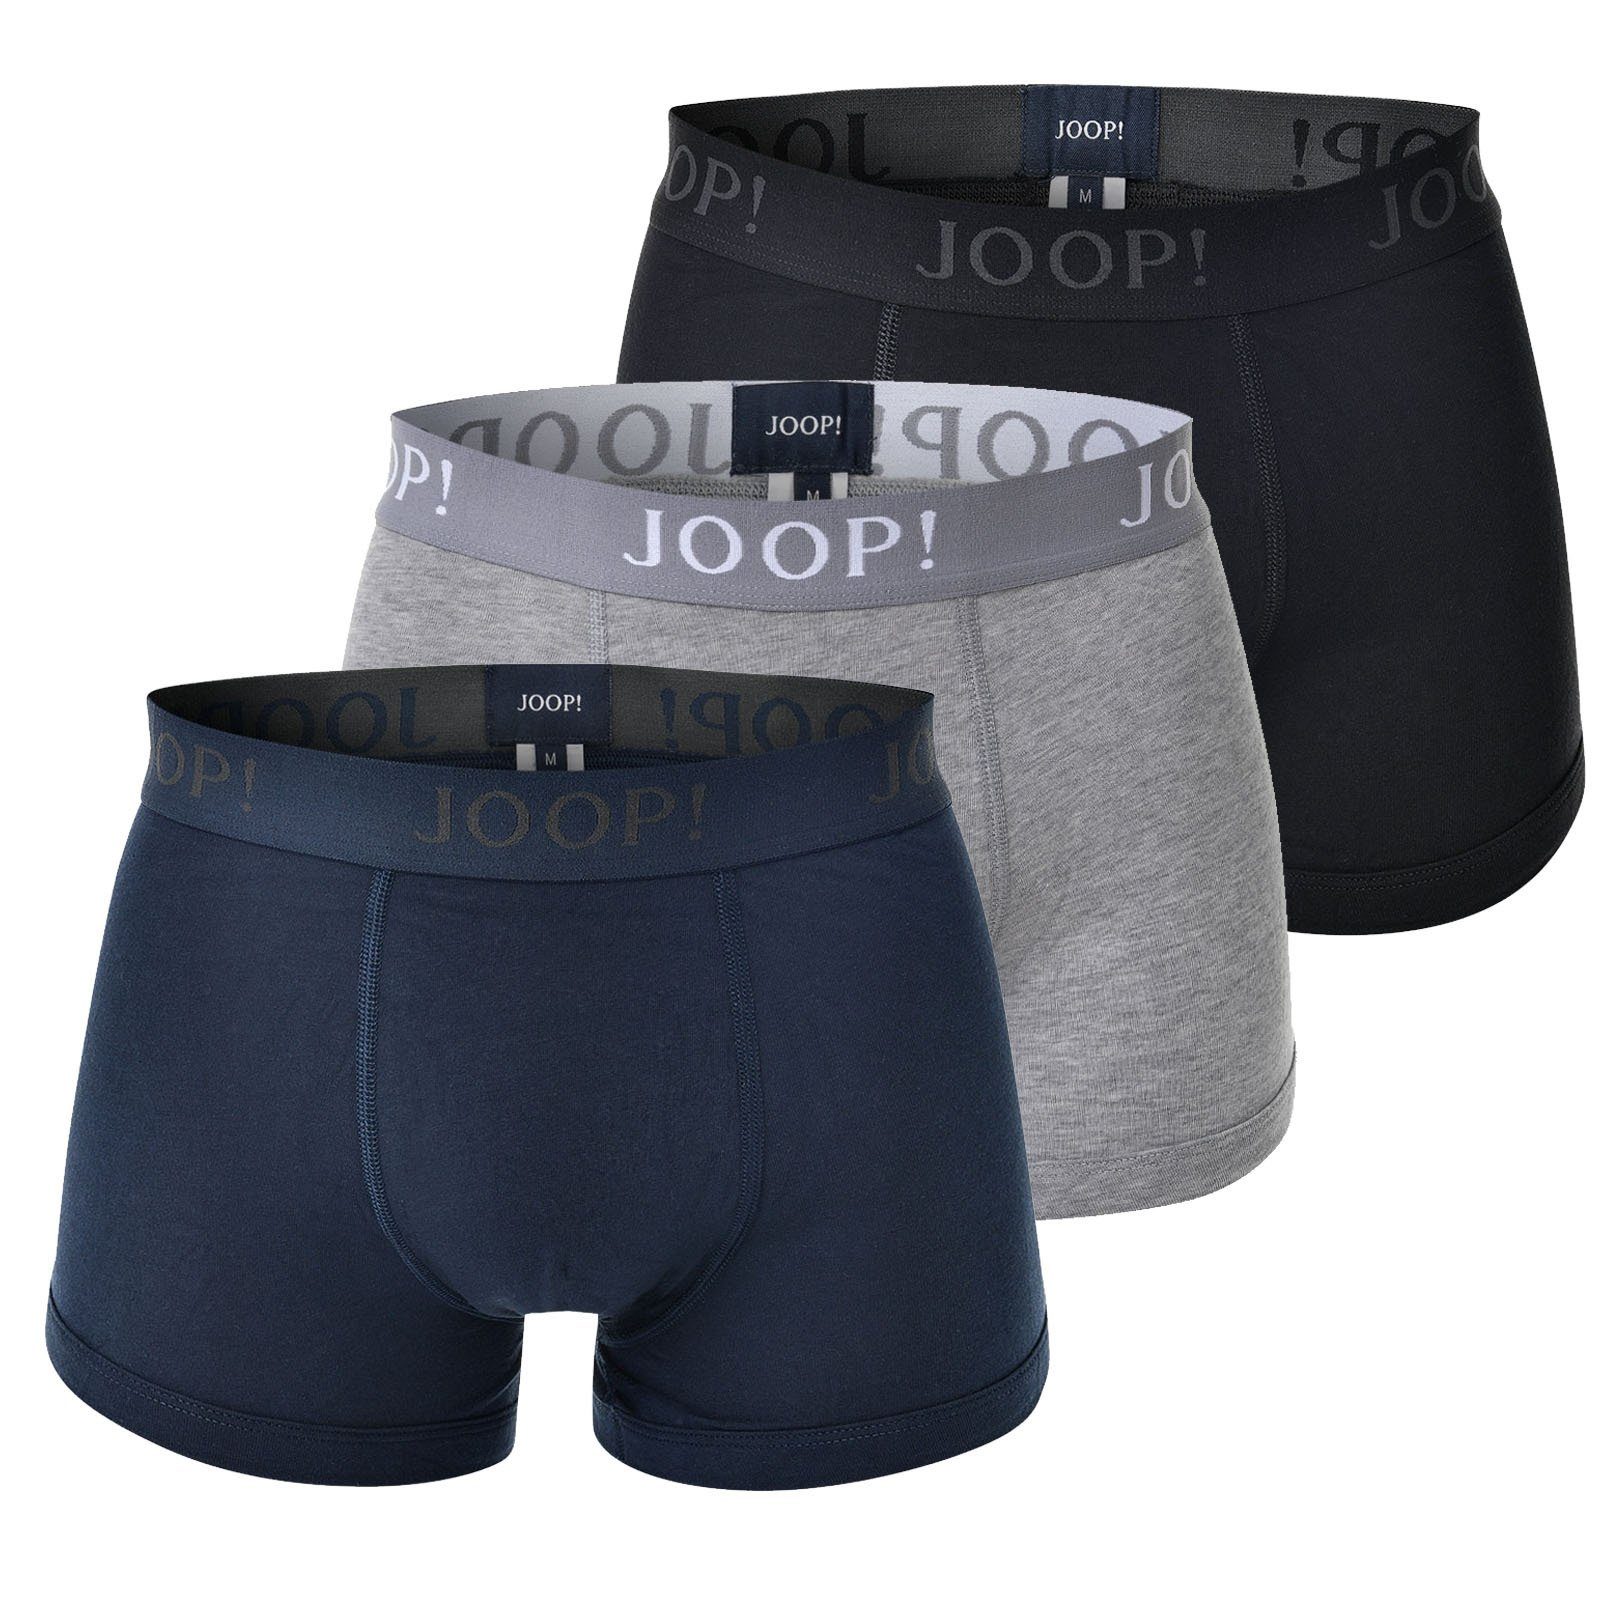 JOOP! Boxer Herren Boxer Shorts, 3er Pack - Fine Cotton